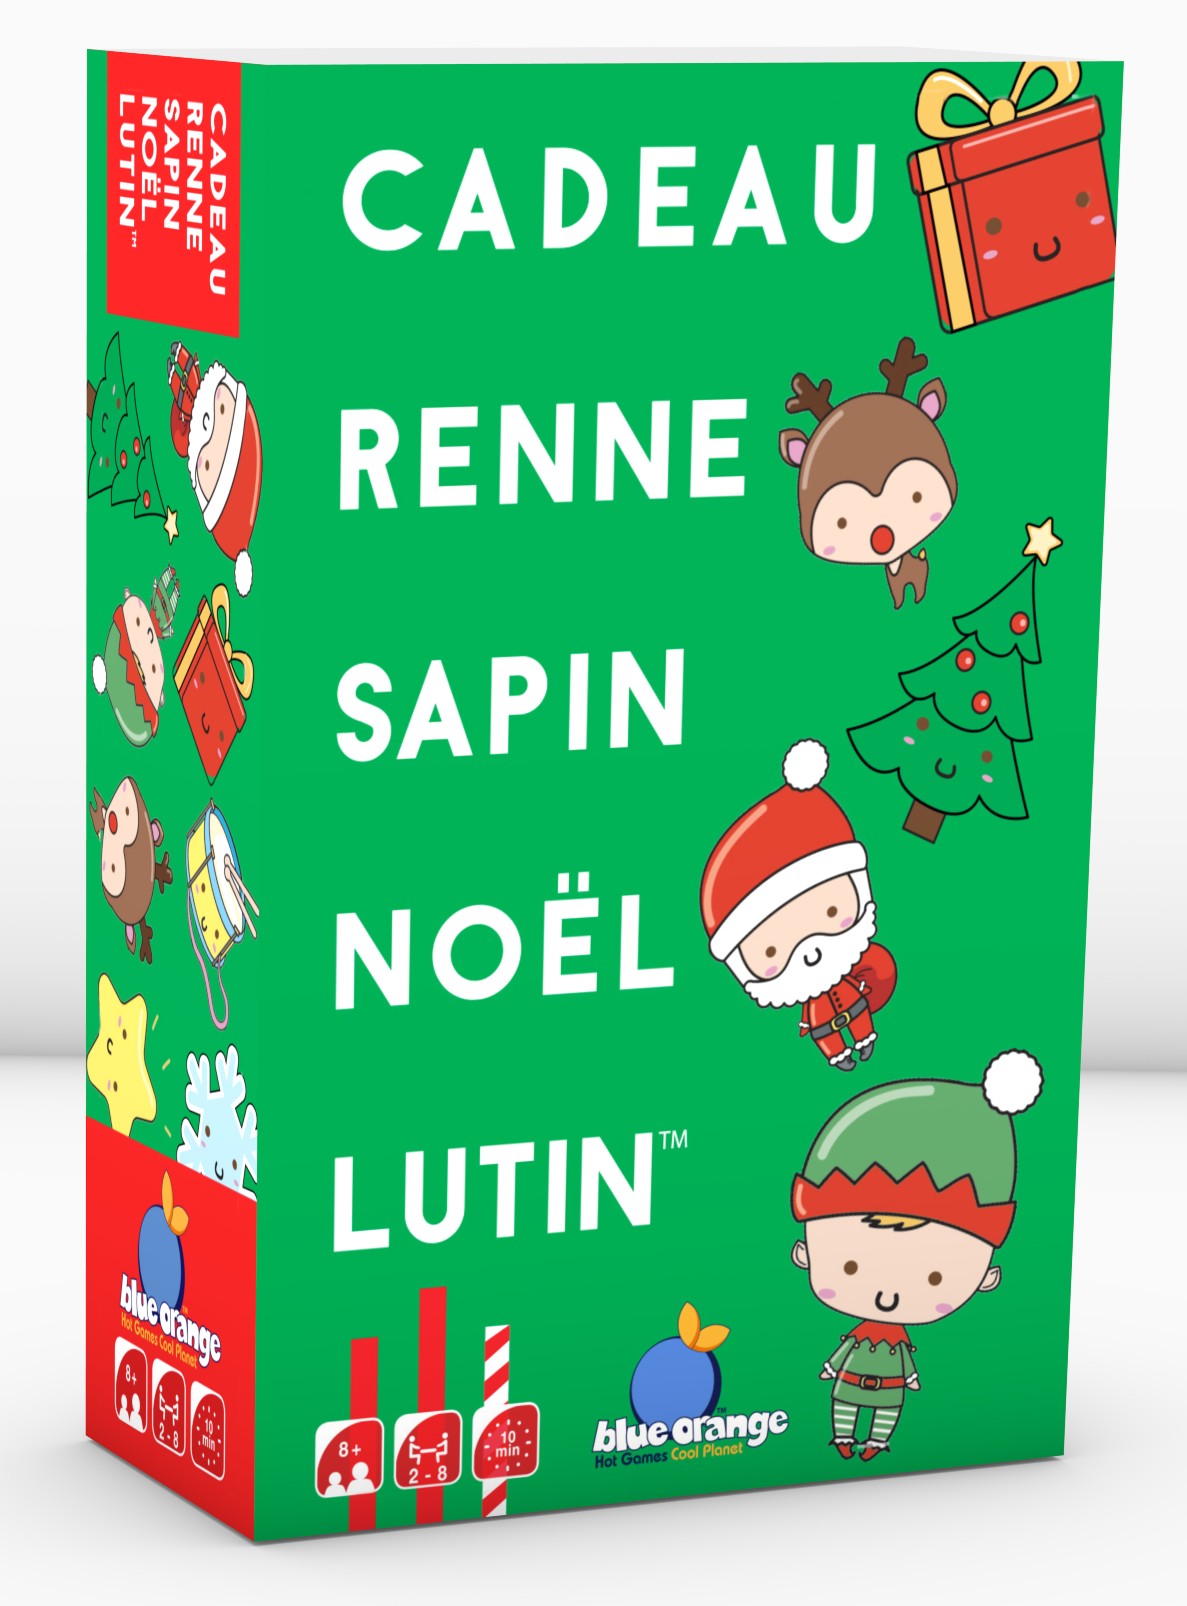 Cadeau Renne Sapin Noël Lutin - LilloJEUX